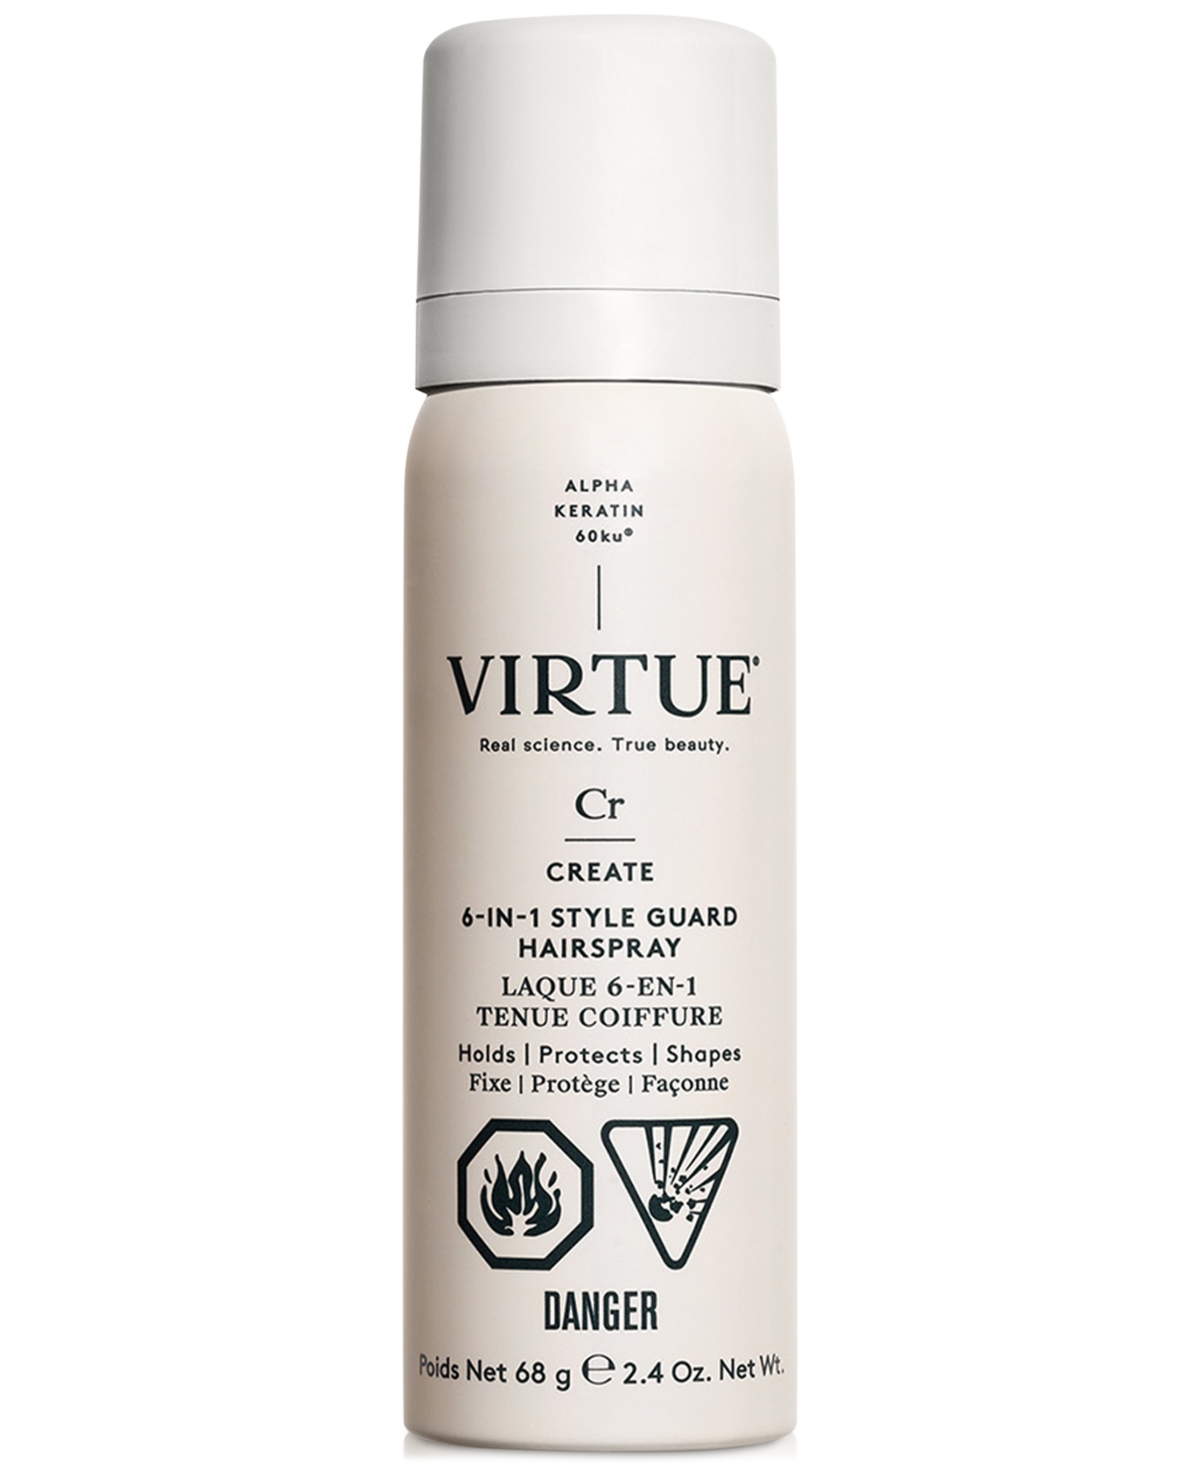 Virtue 6-in-1 Style Guard Hairspray, 2.4 Oz.